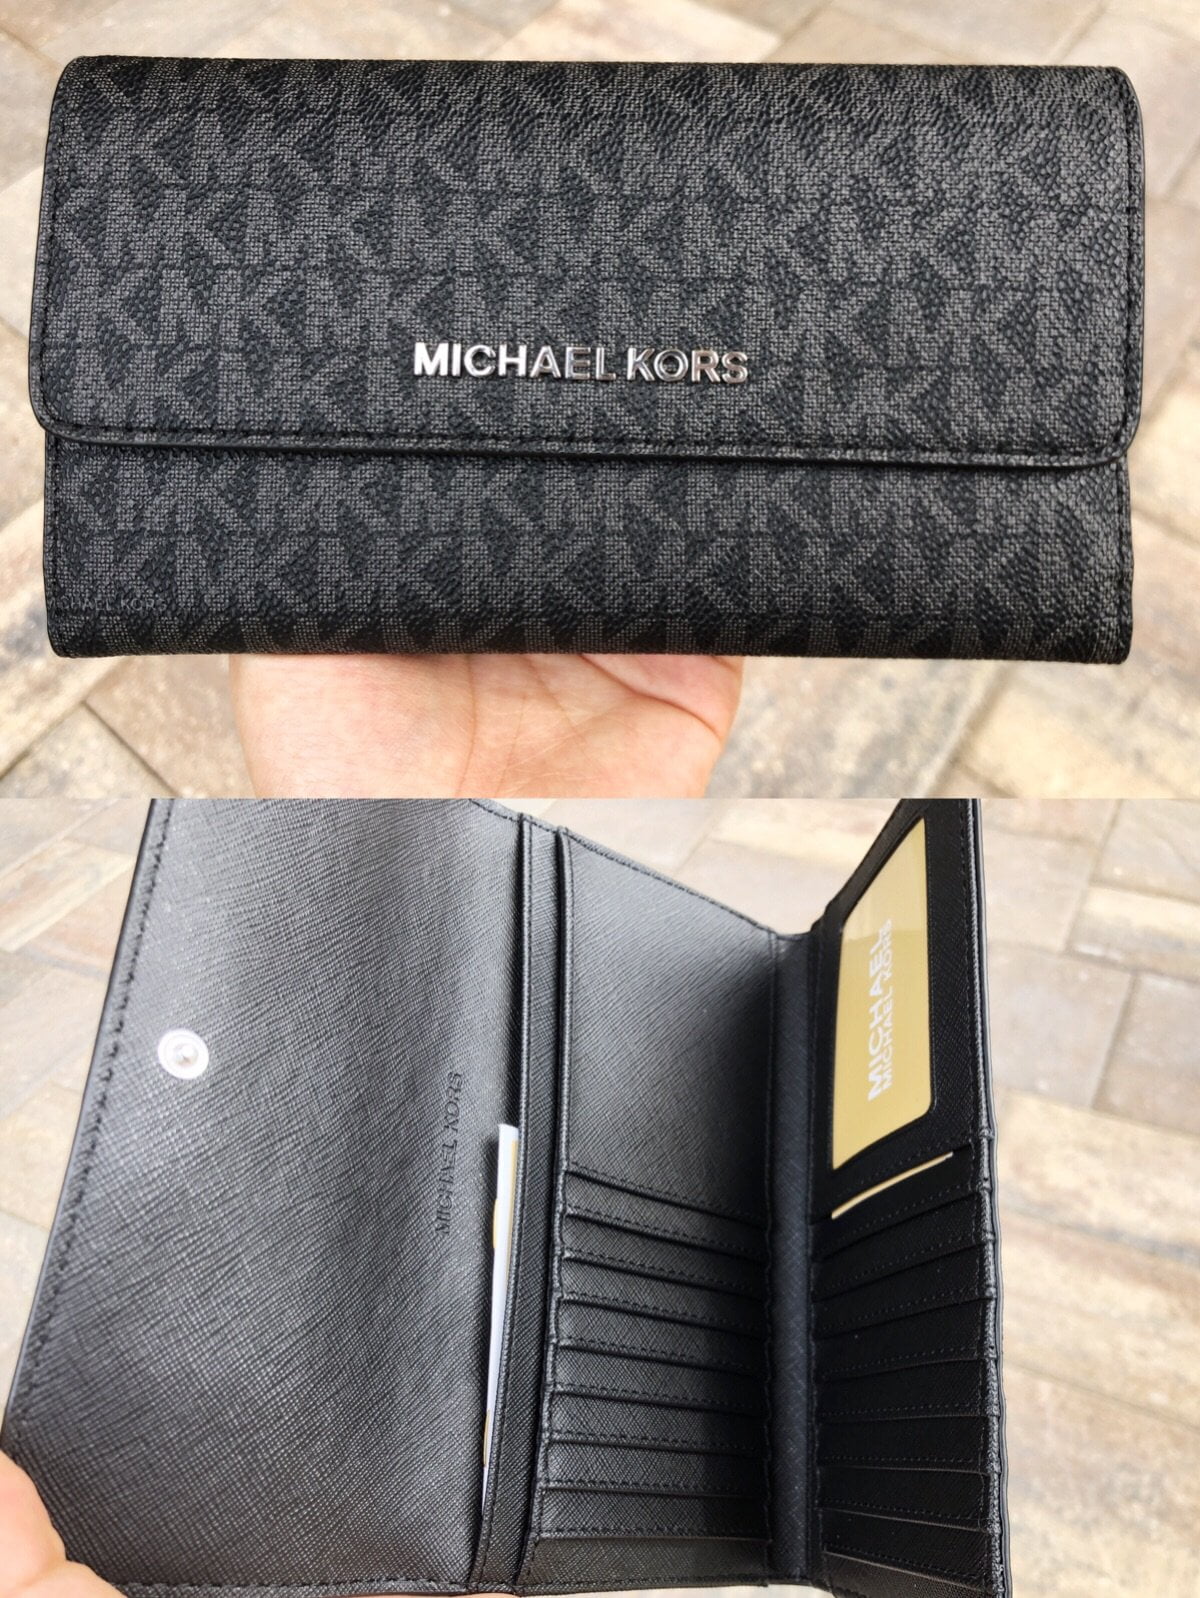 michael kors jet set travel wallet